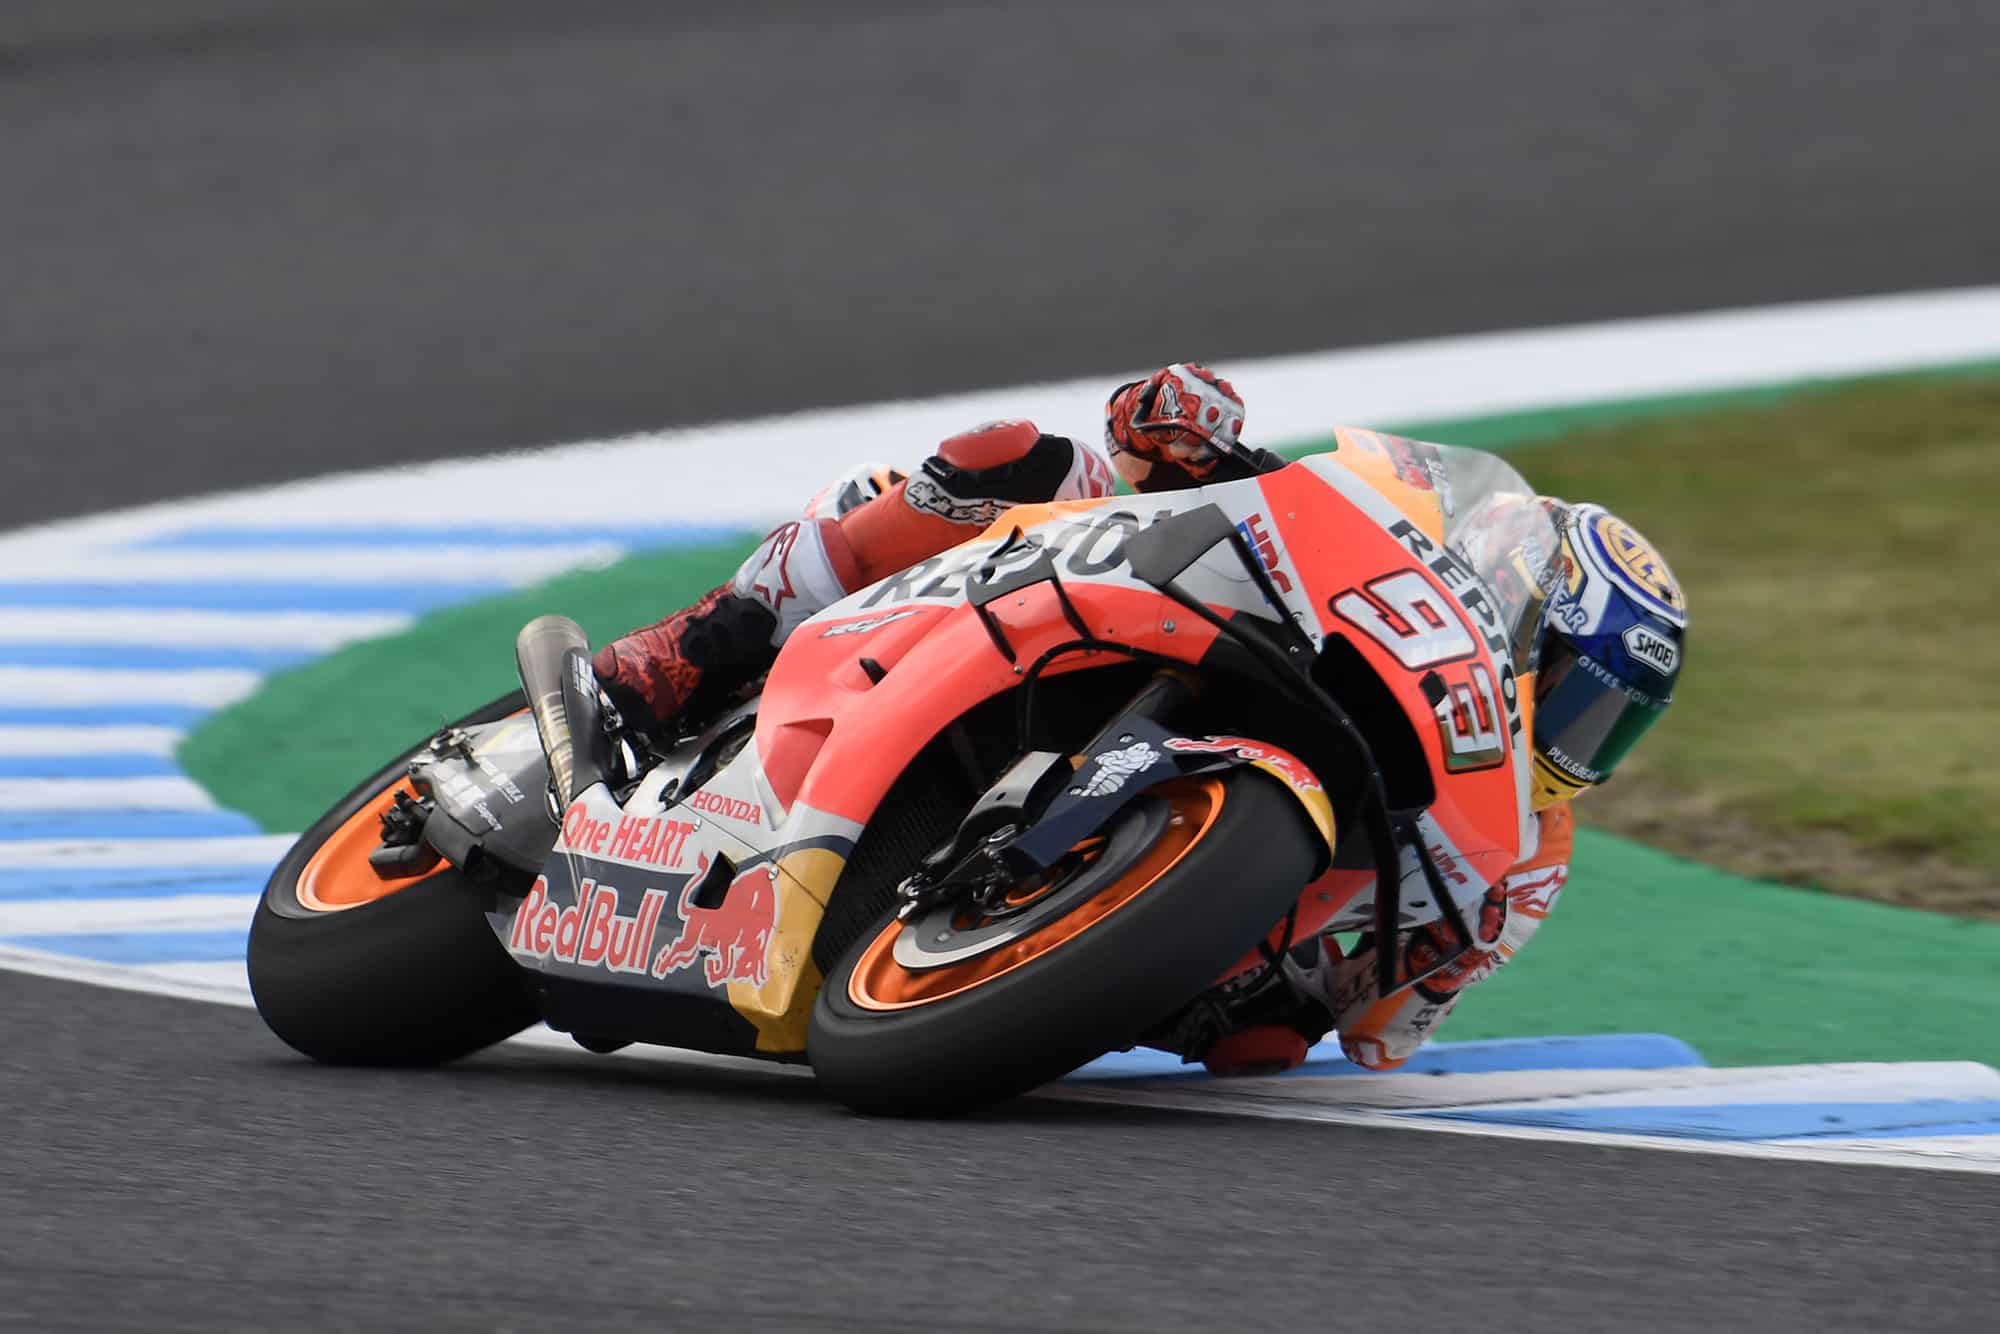 Marc Marquez cornering during the 2019 MotoGP Grand Prix of Japan